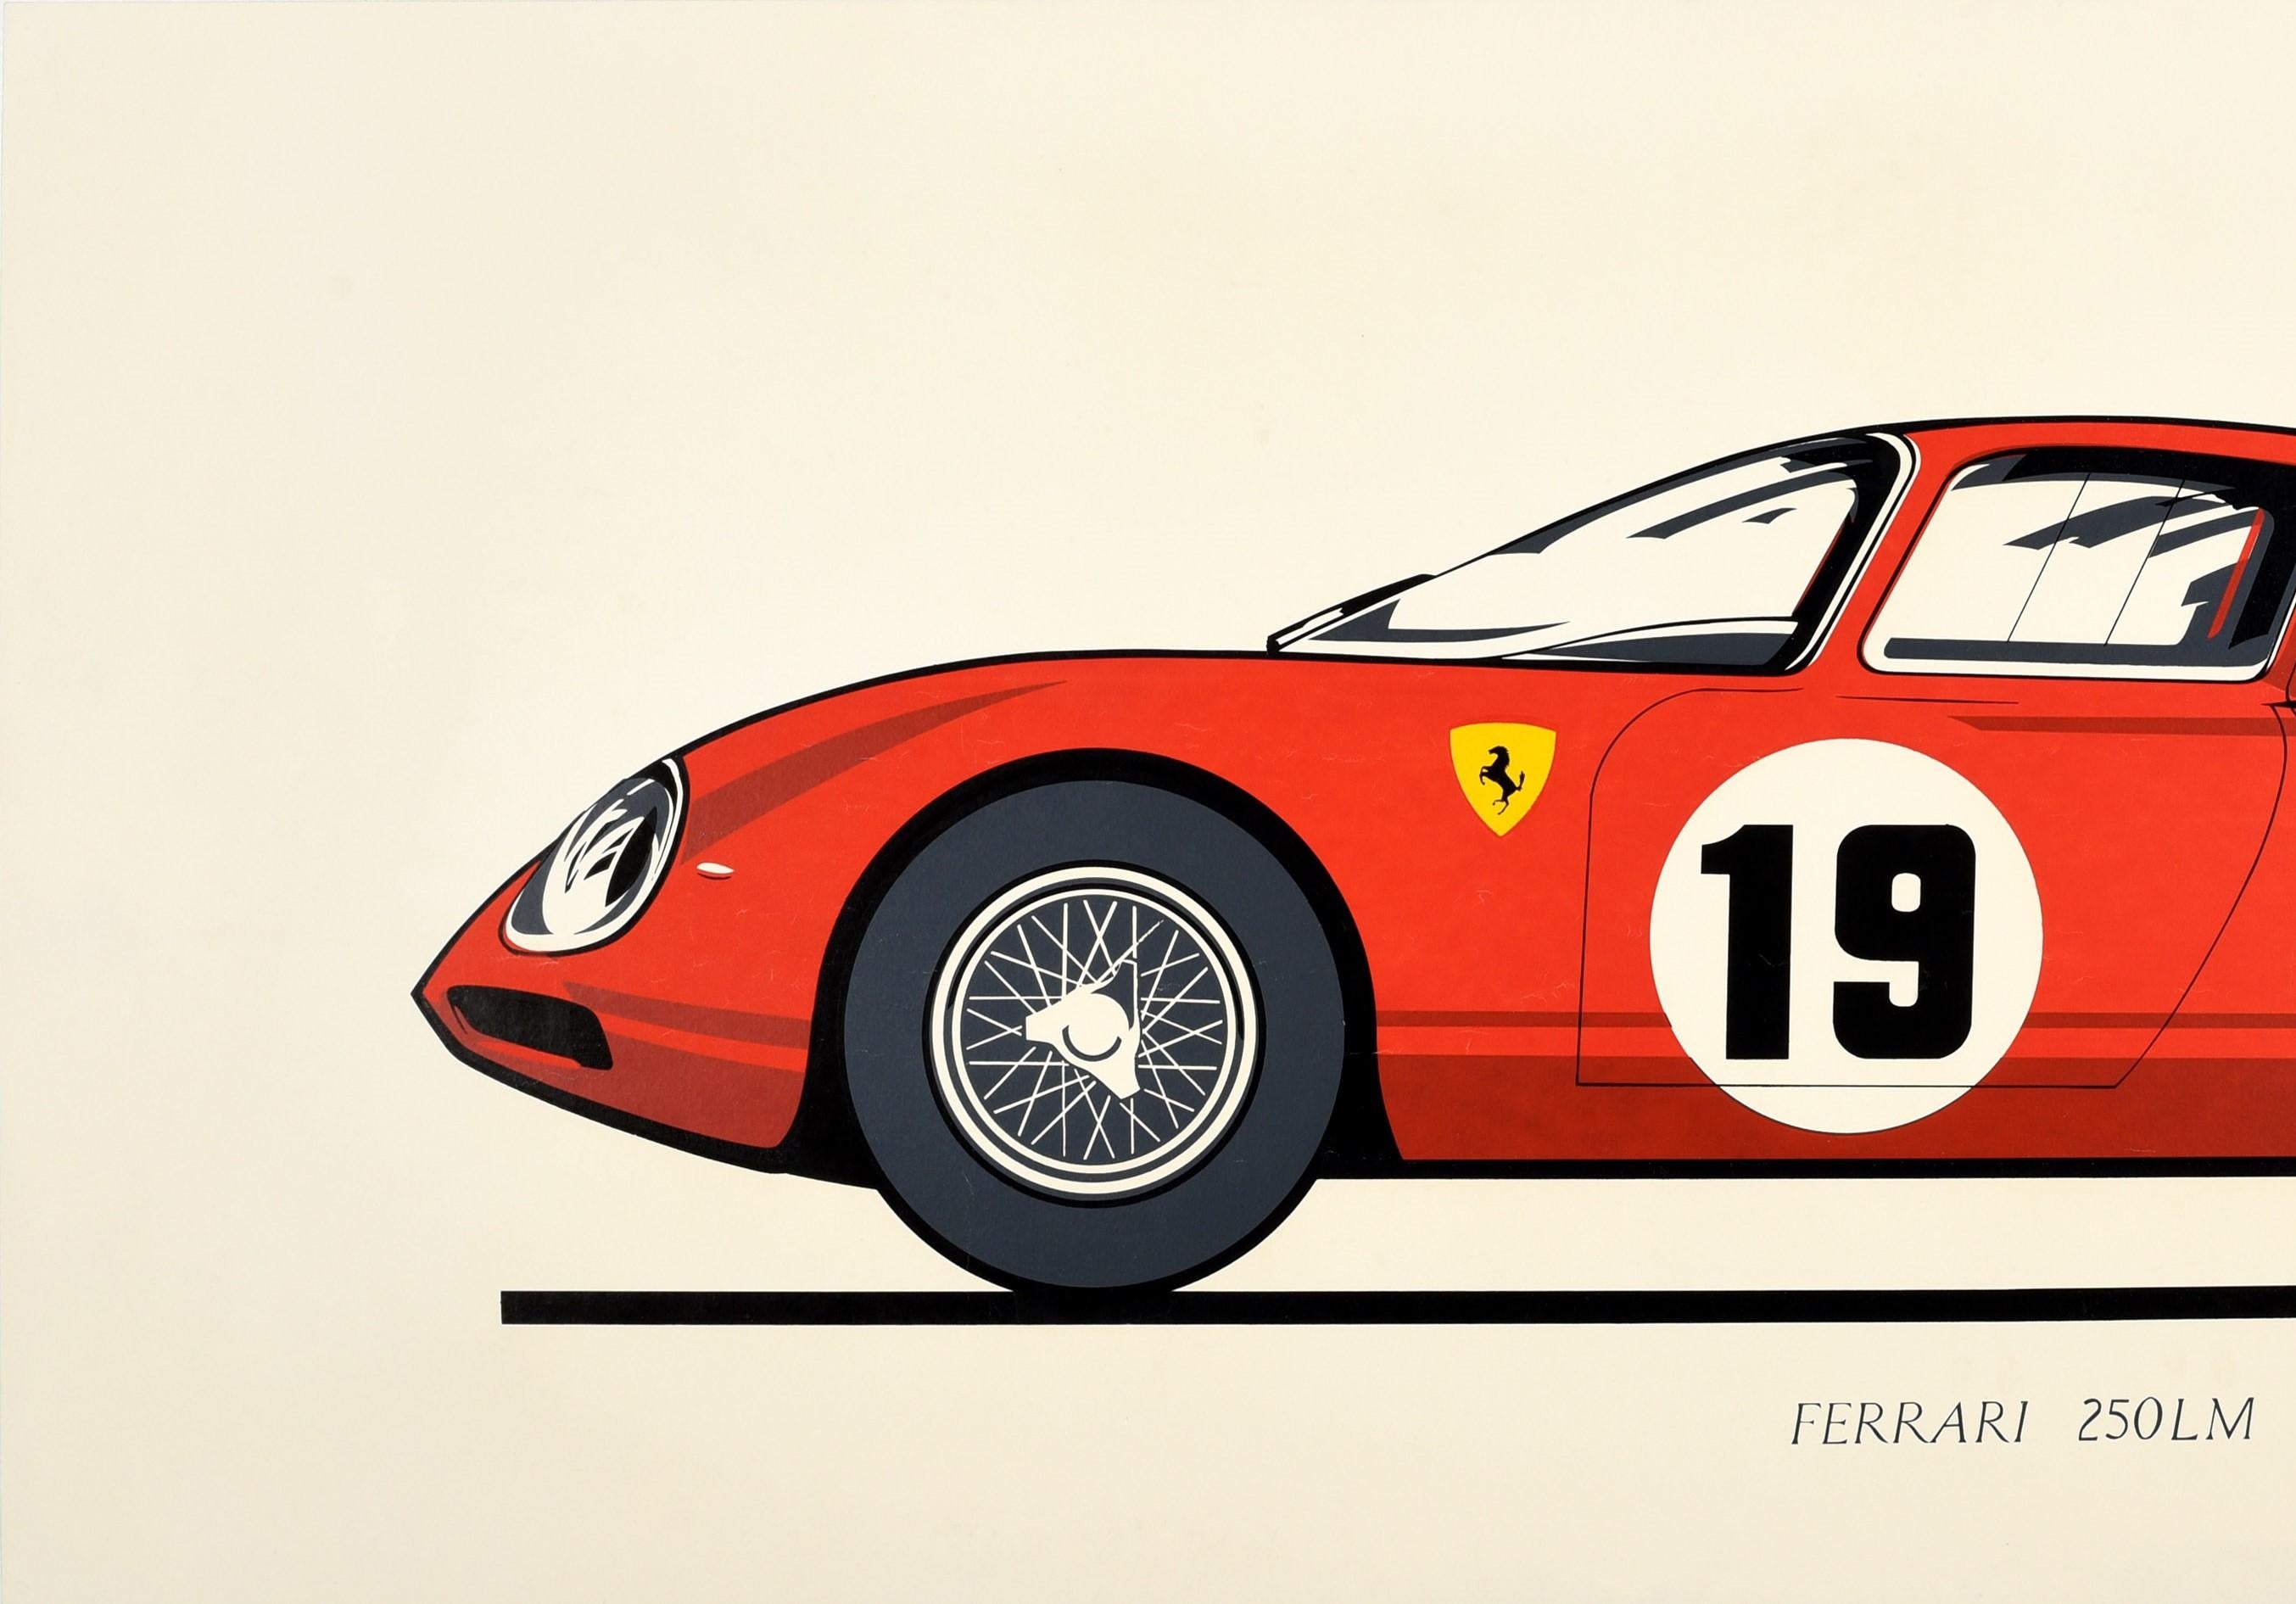 Original Vintage Ferrari 250LM Sports Car Advertising Poster Paris Motor Show - Print by Unknown